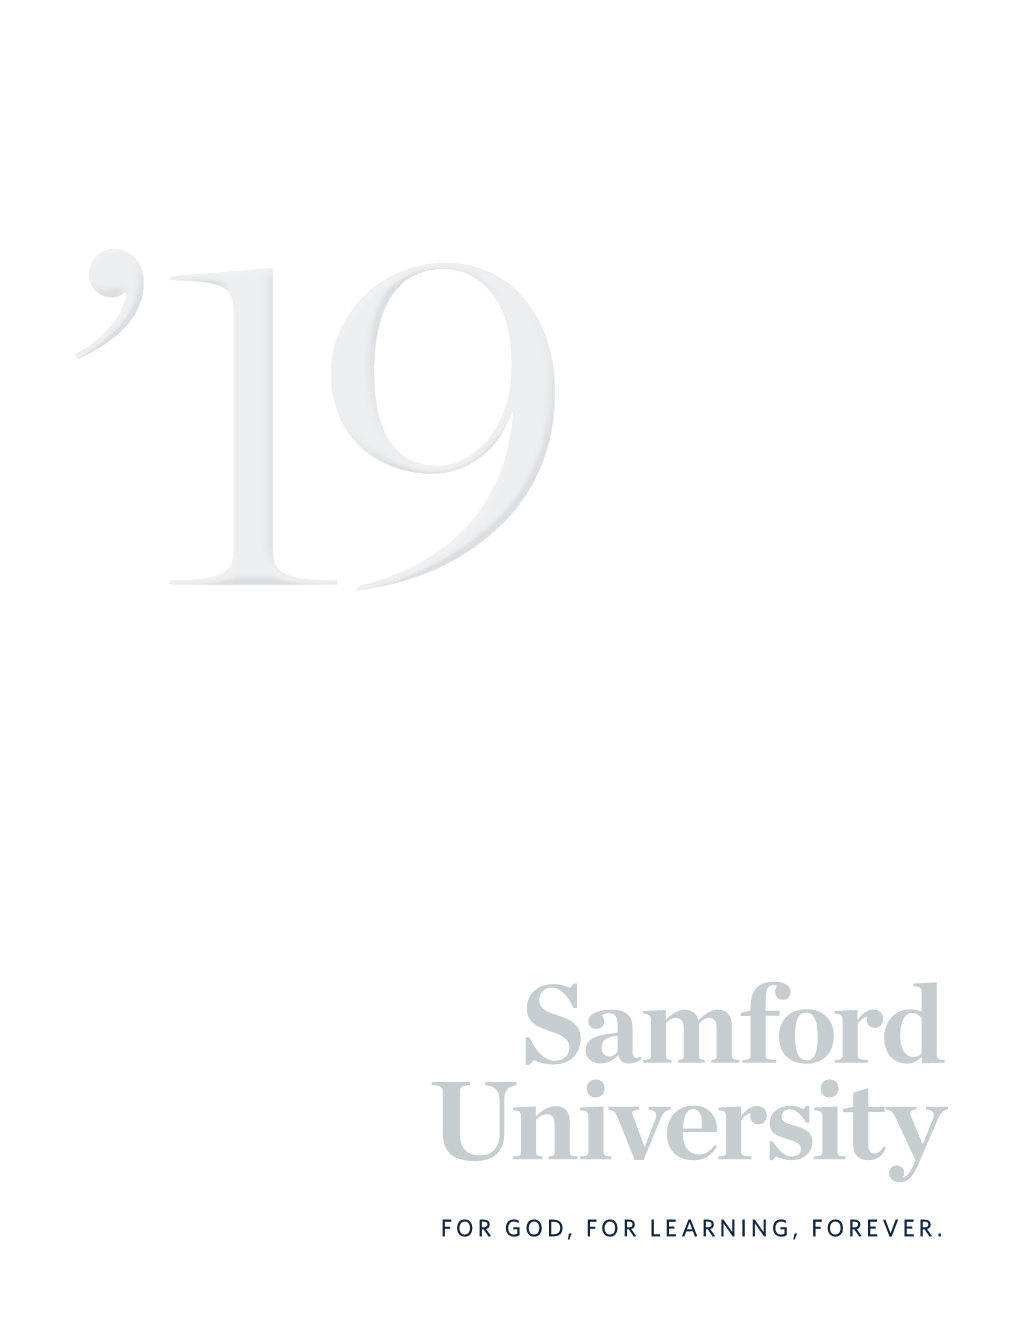 Samford University Annual Report